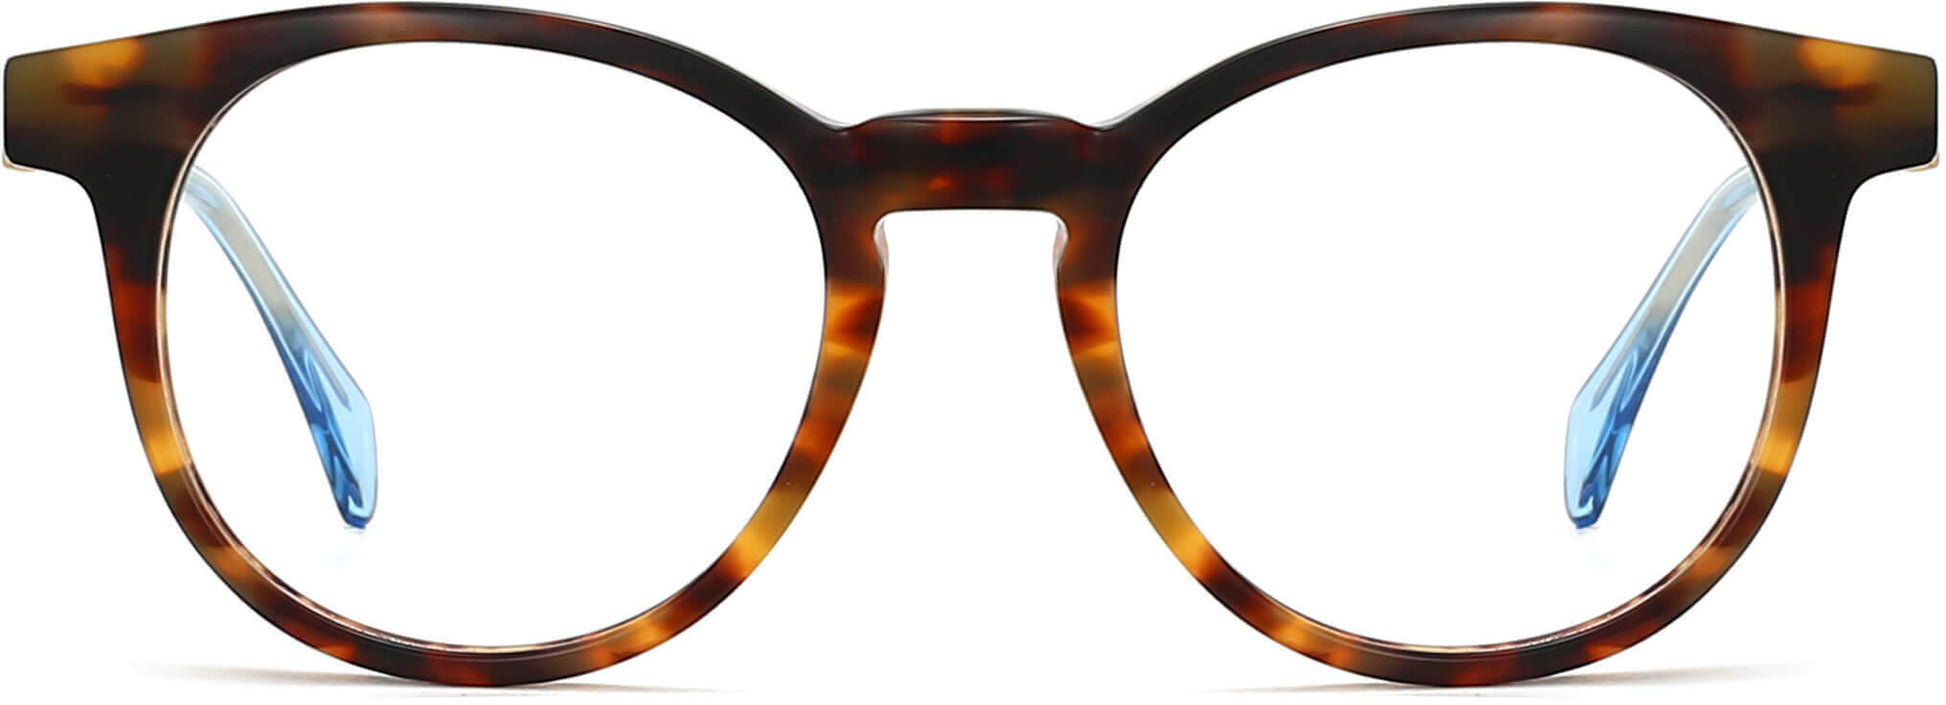 Harri Round Tortoise Eyeglasses from ANRRI, front view